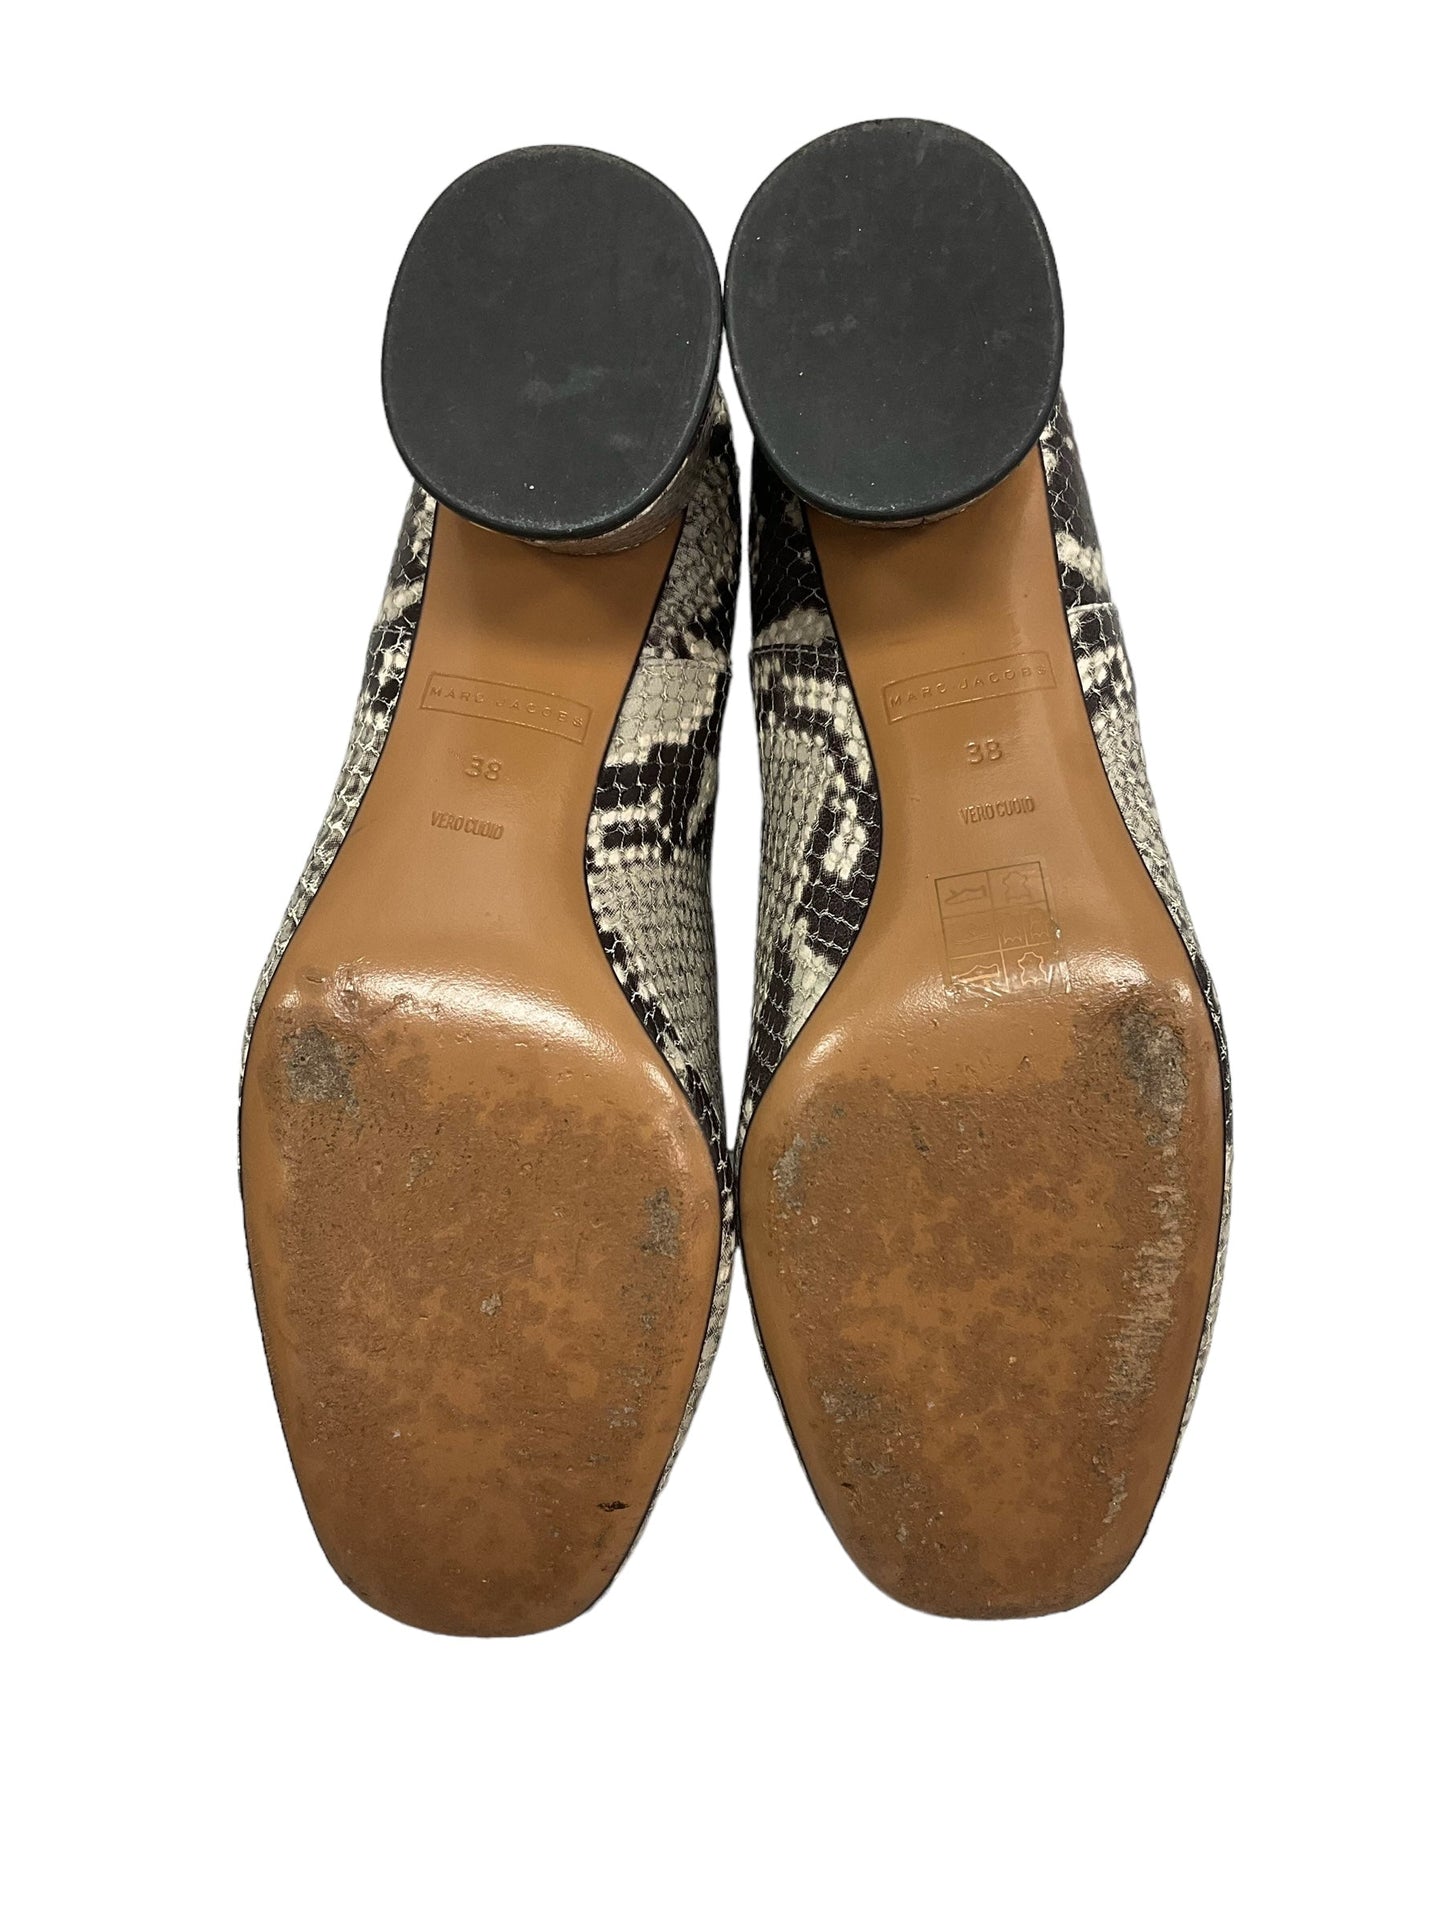 Snakeskin Print Boots Luxury Designer Marc Jacobs, Size 8